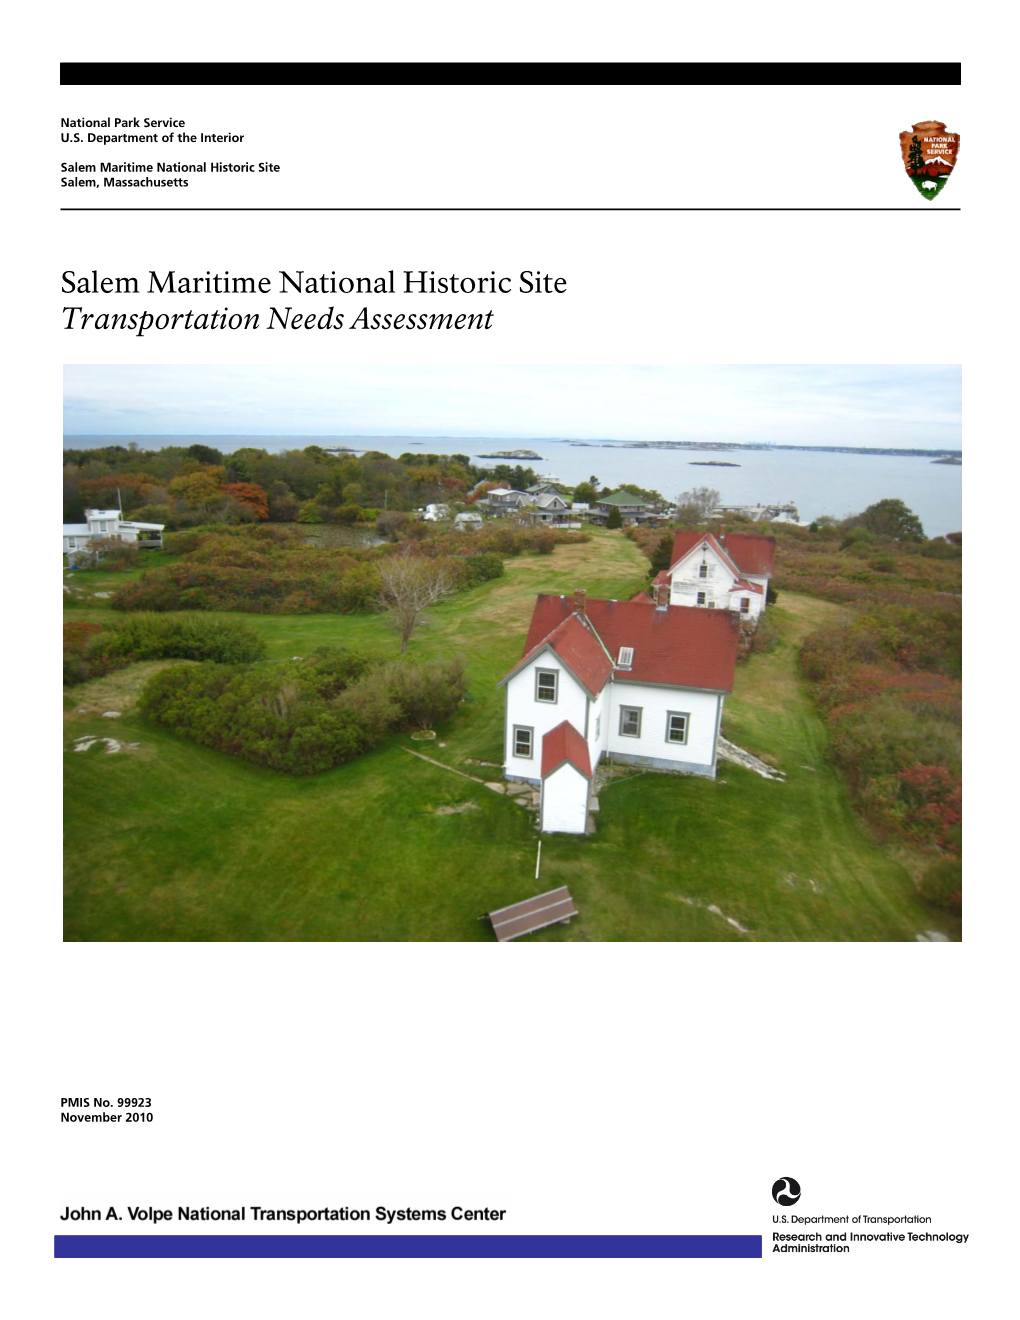 Salem Maritime National Historic Site Transportation Needs Assessment